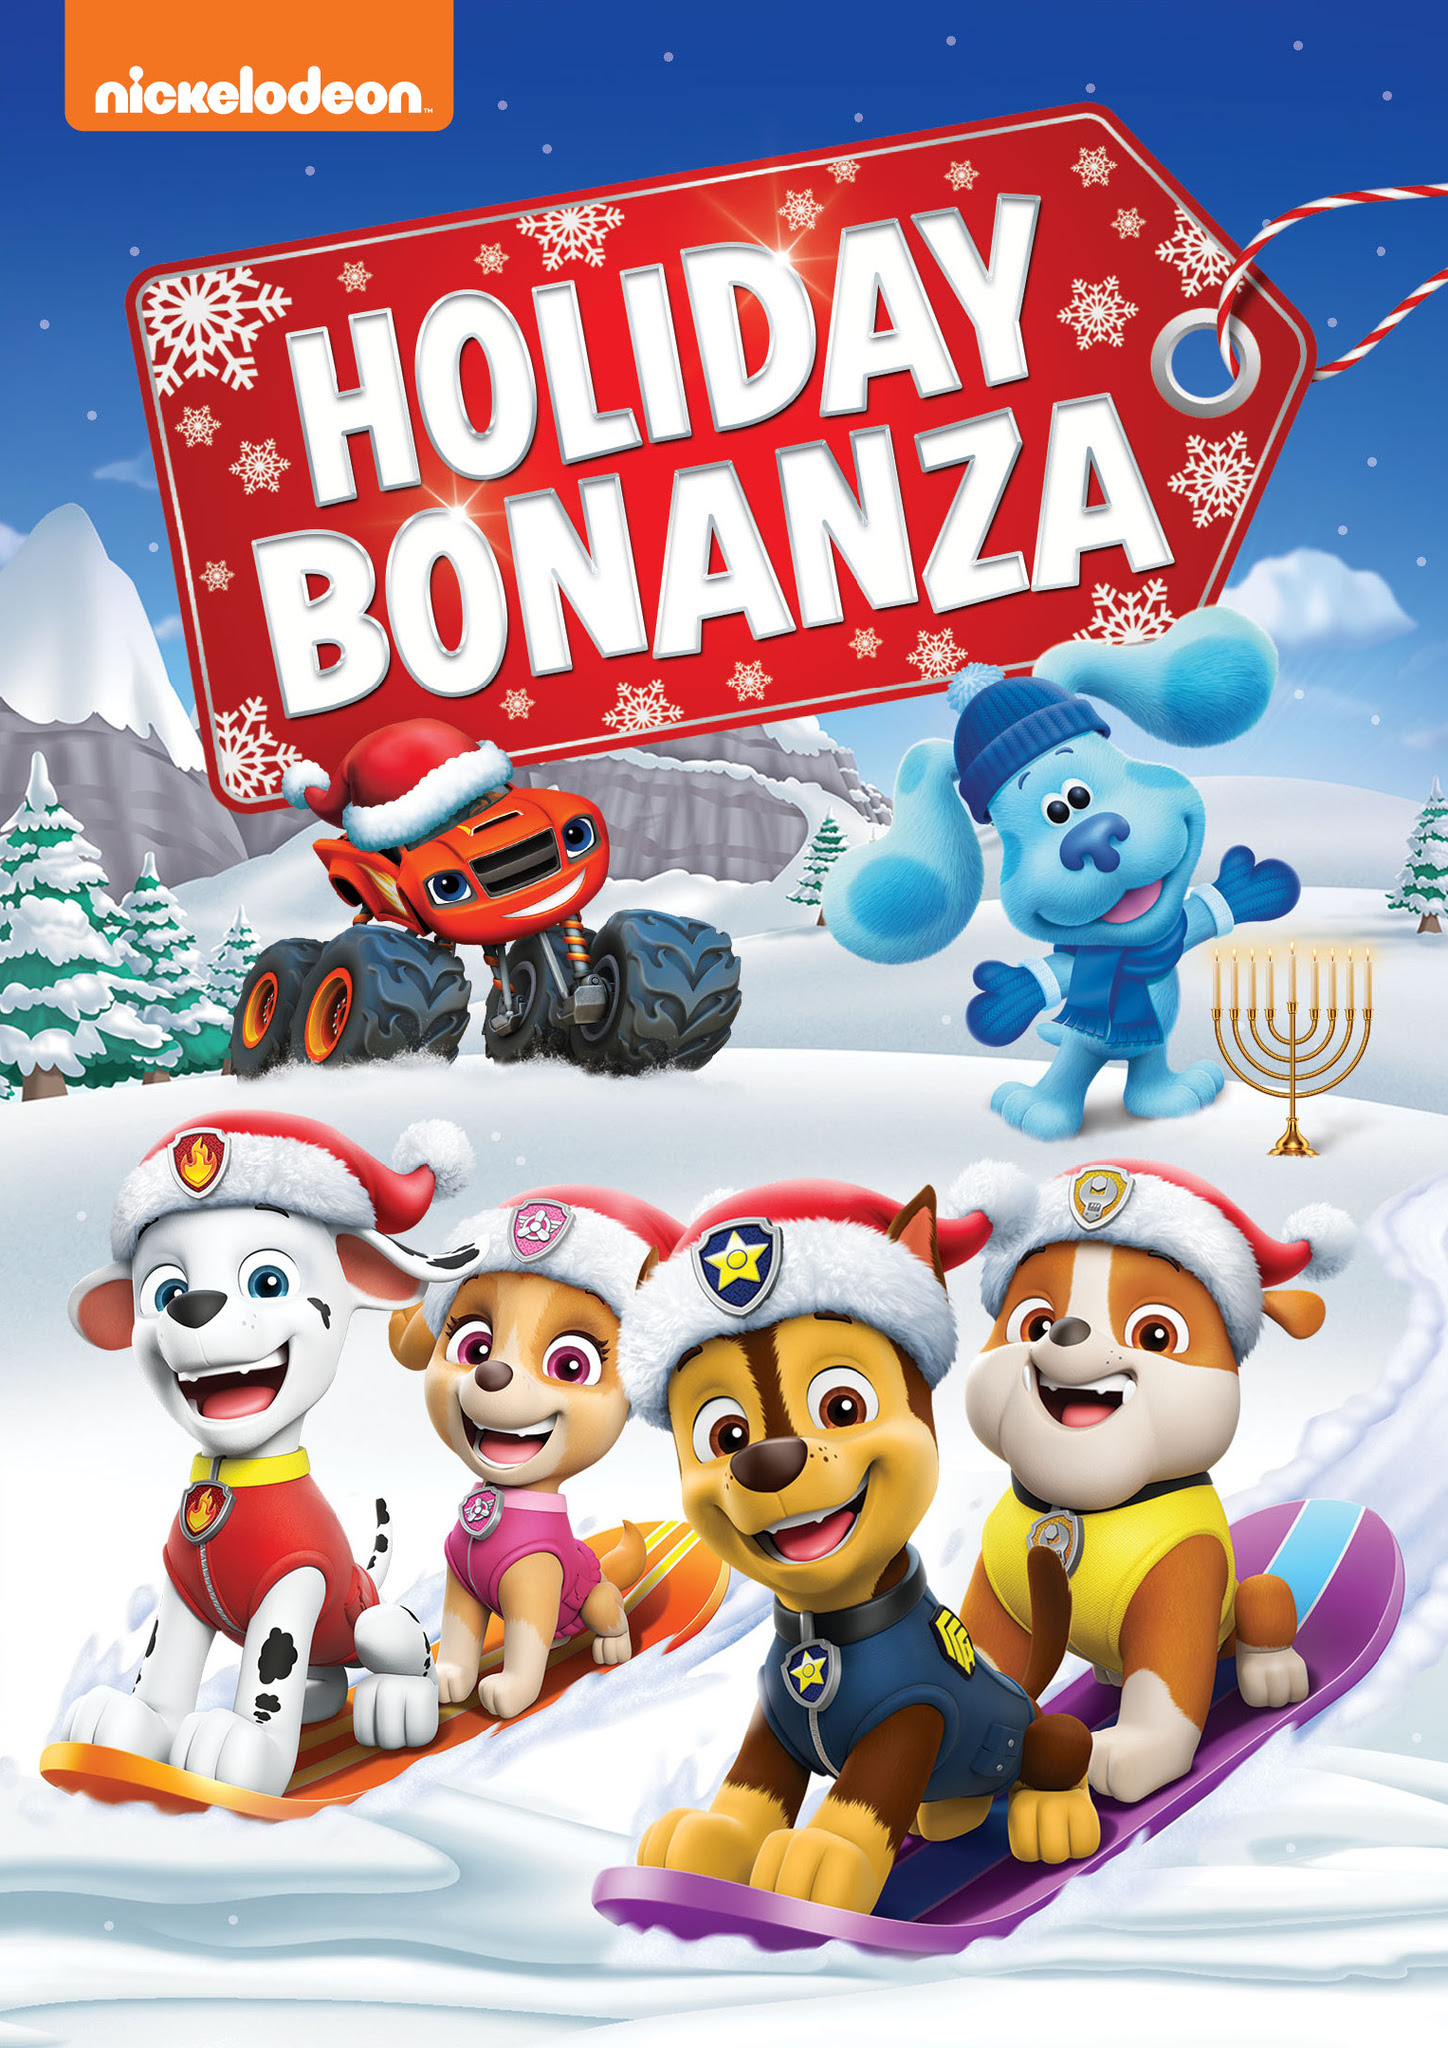 dvd giveaway for nick jr holiday bonanza!